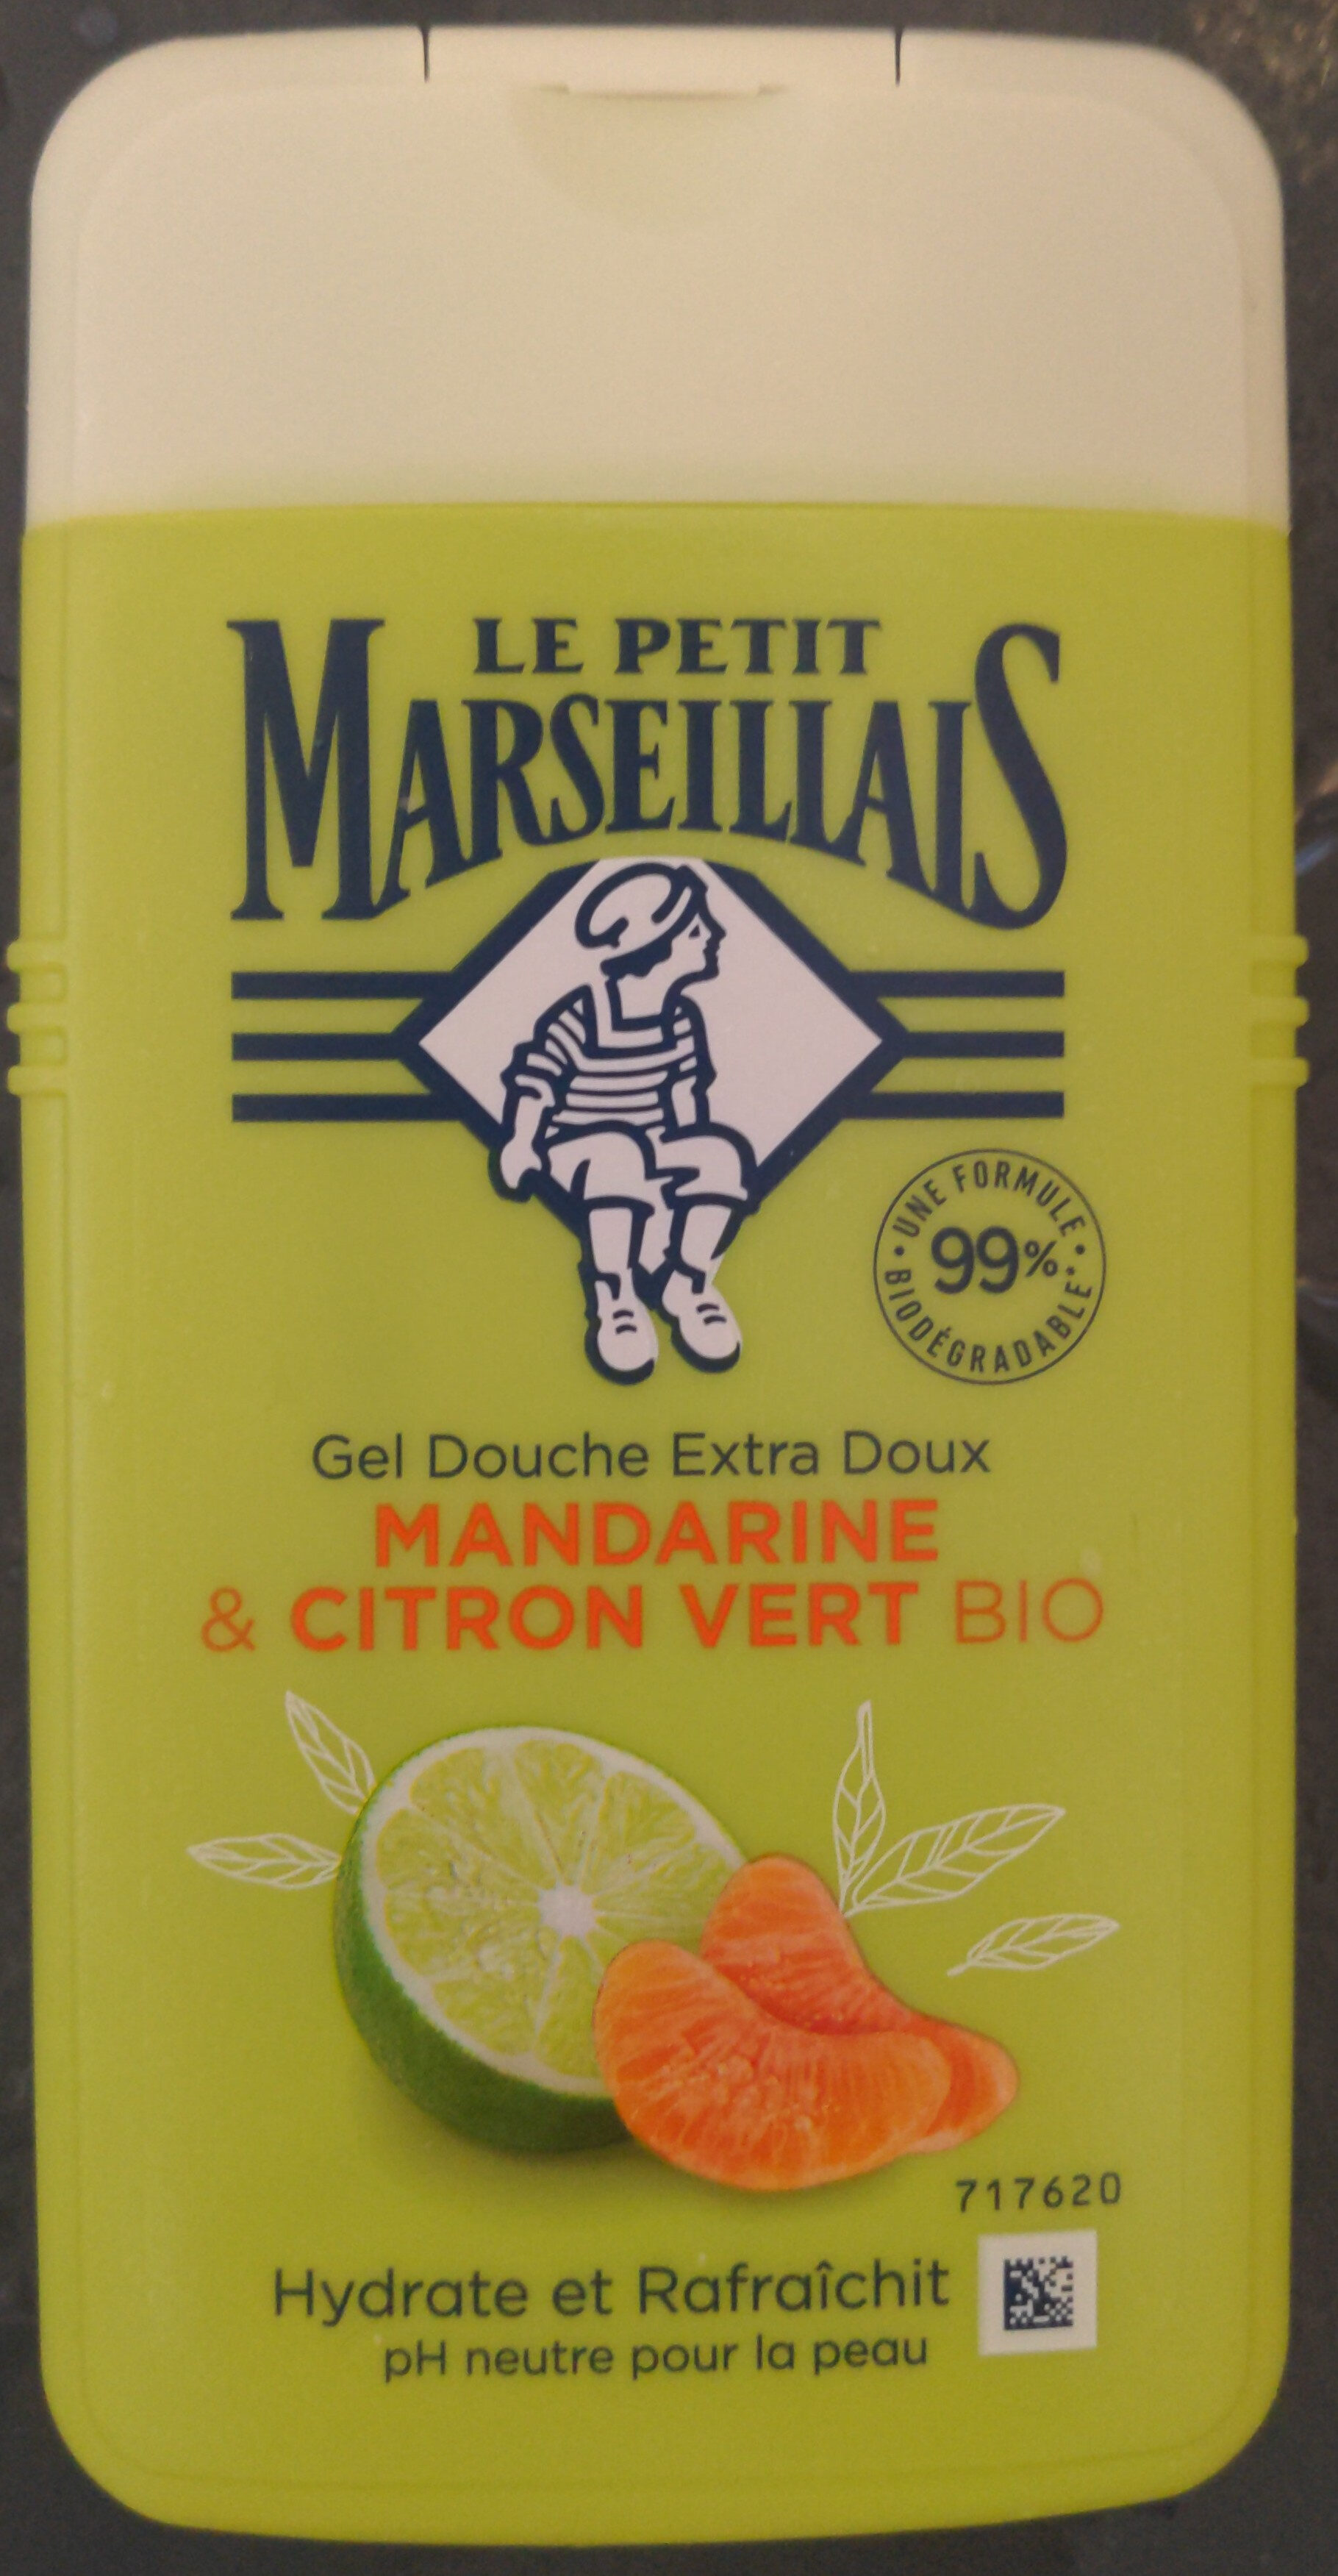 Gel douche extra doux mandarine & citron vert bio - Produto - fr